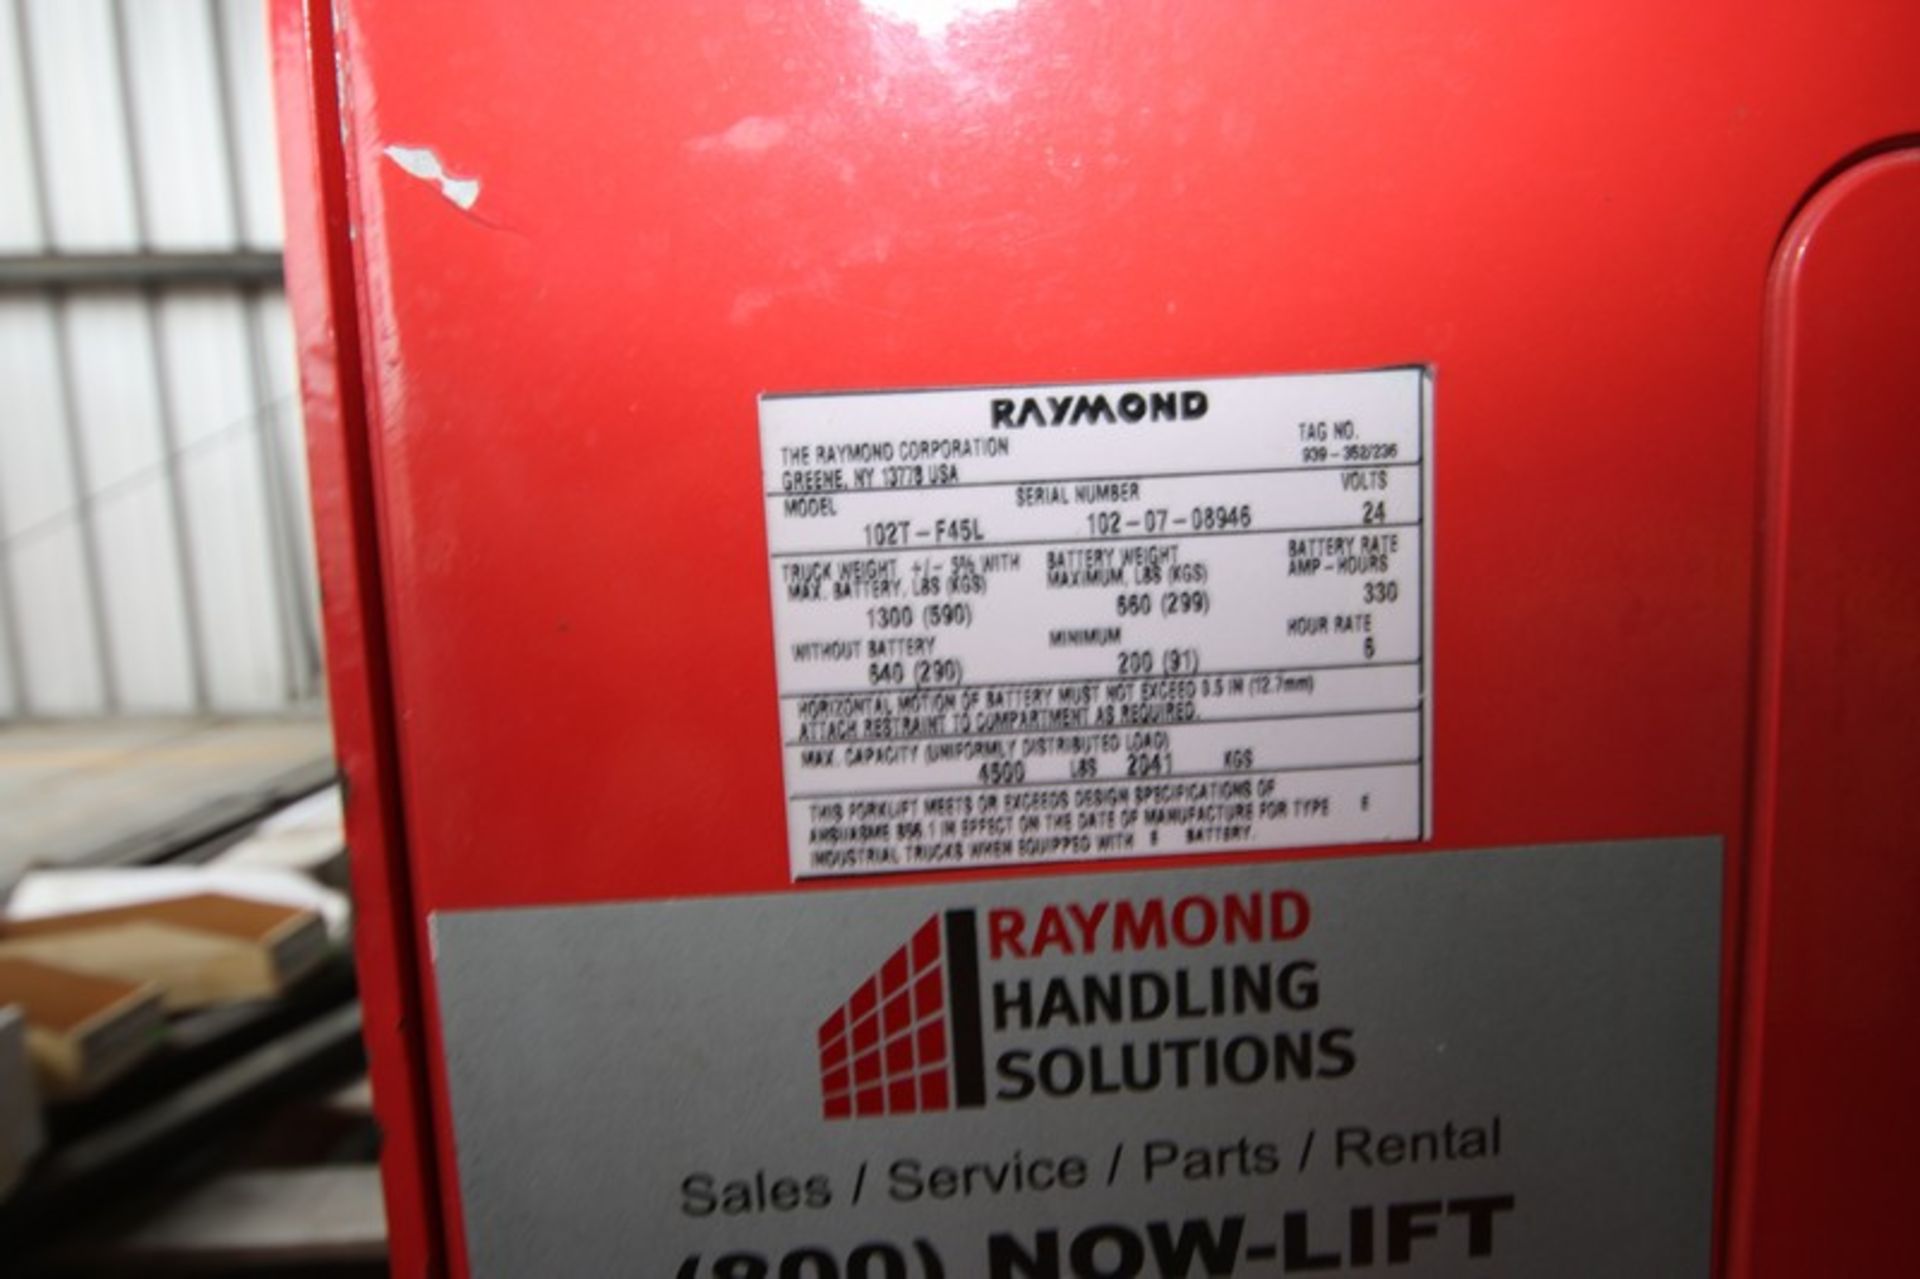 Raymond 4,500 lb. Electric Pallet Jack, M/N 102T-F45L, S/N 102-07-08946, 24 Volt Battery - Bild 2 aus 3